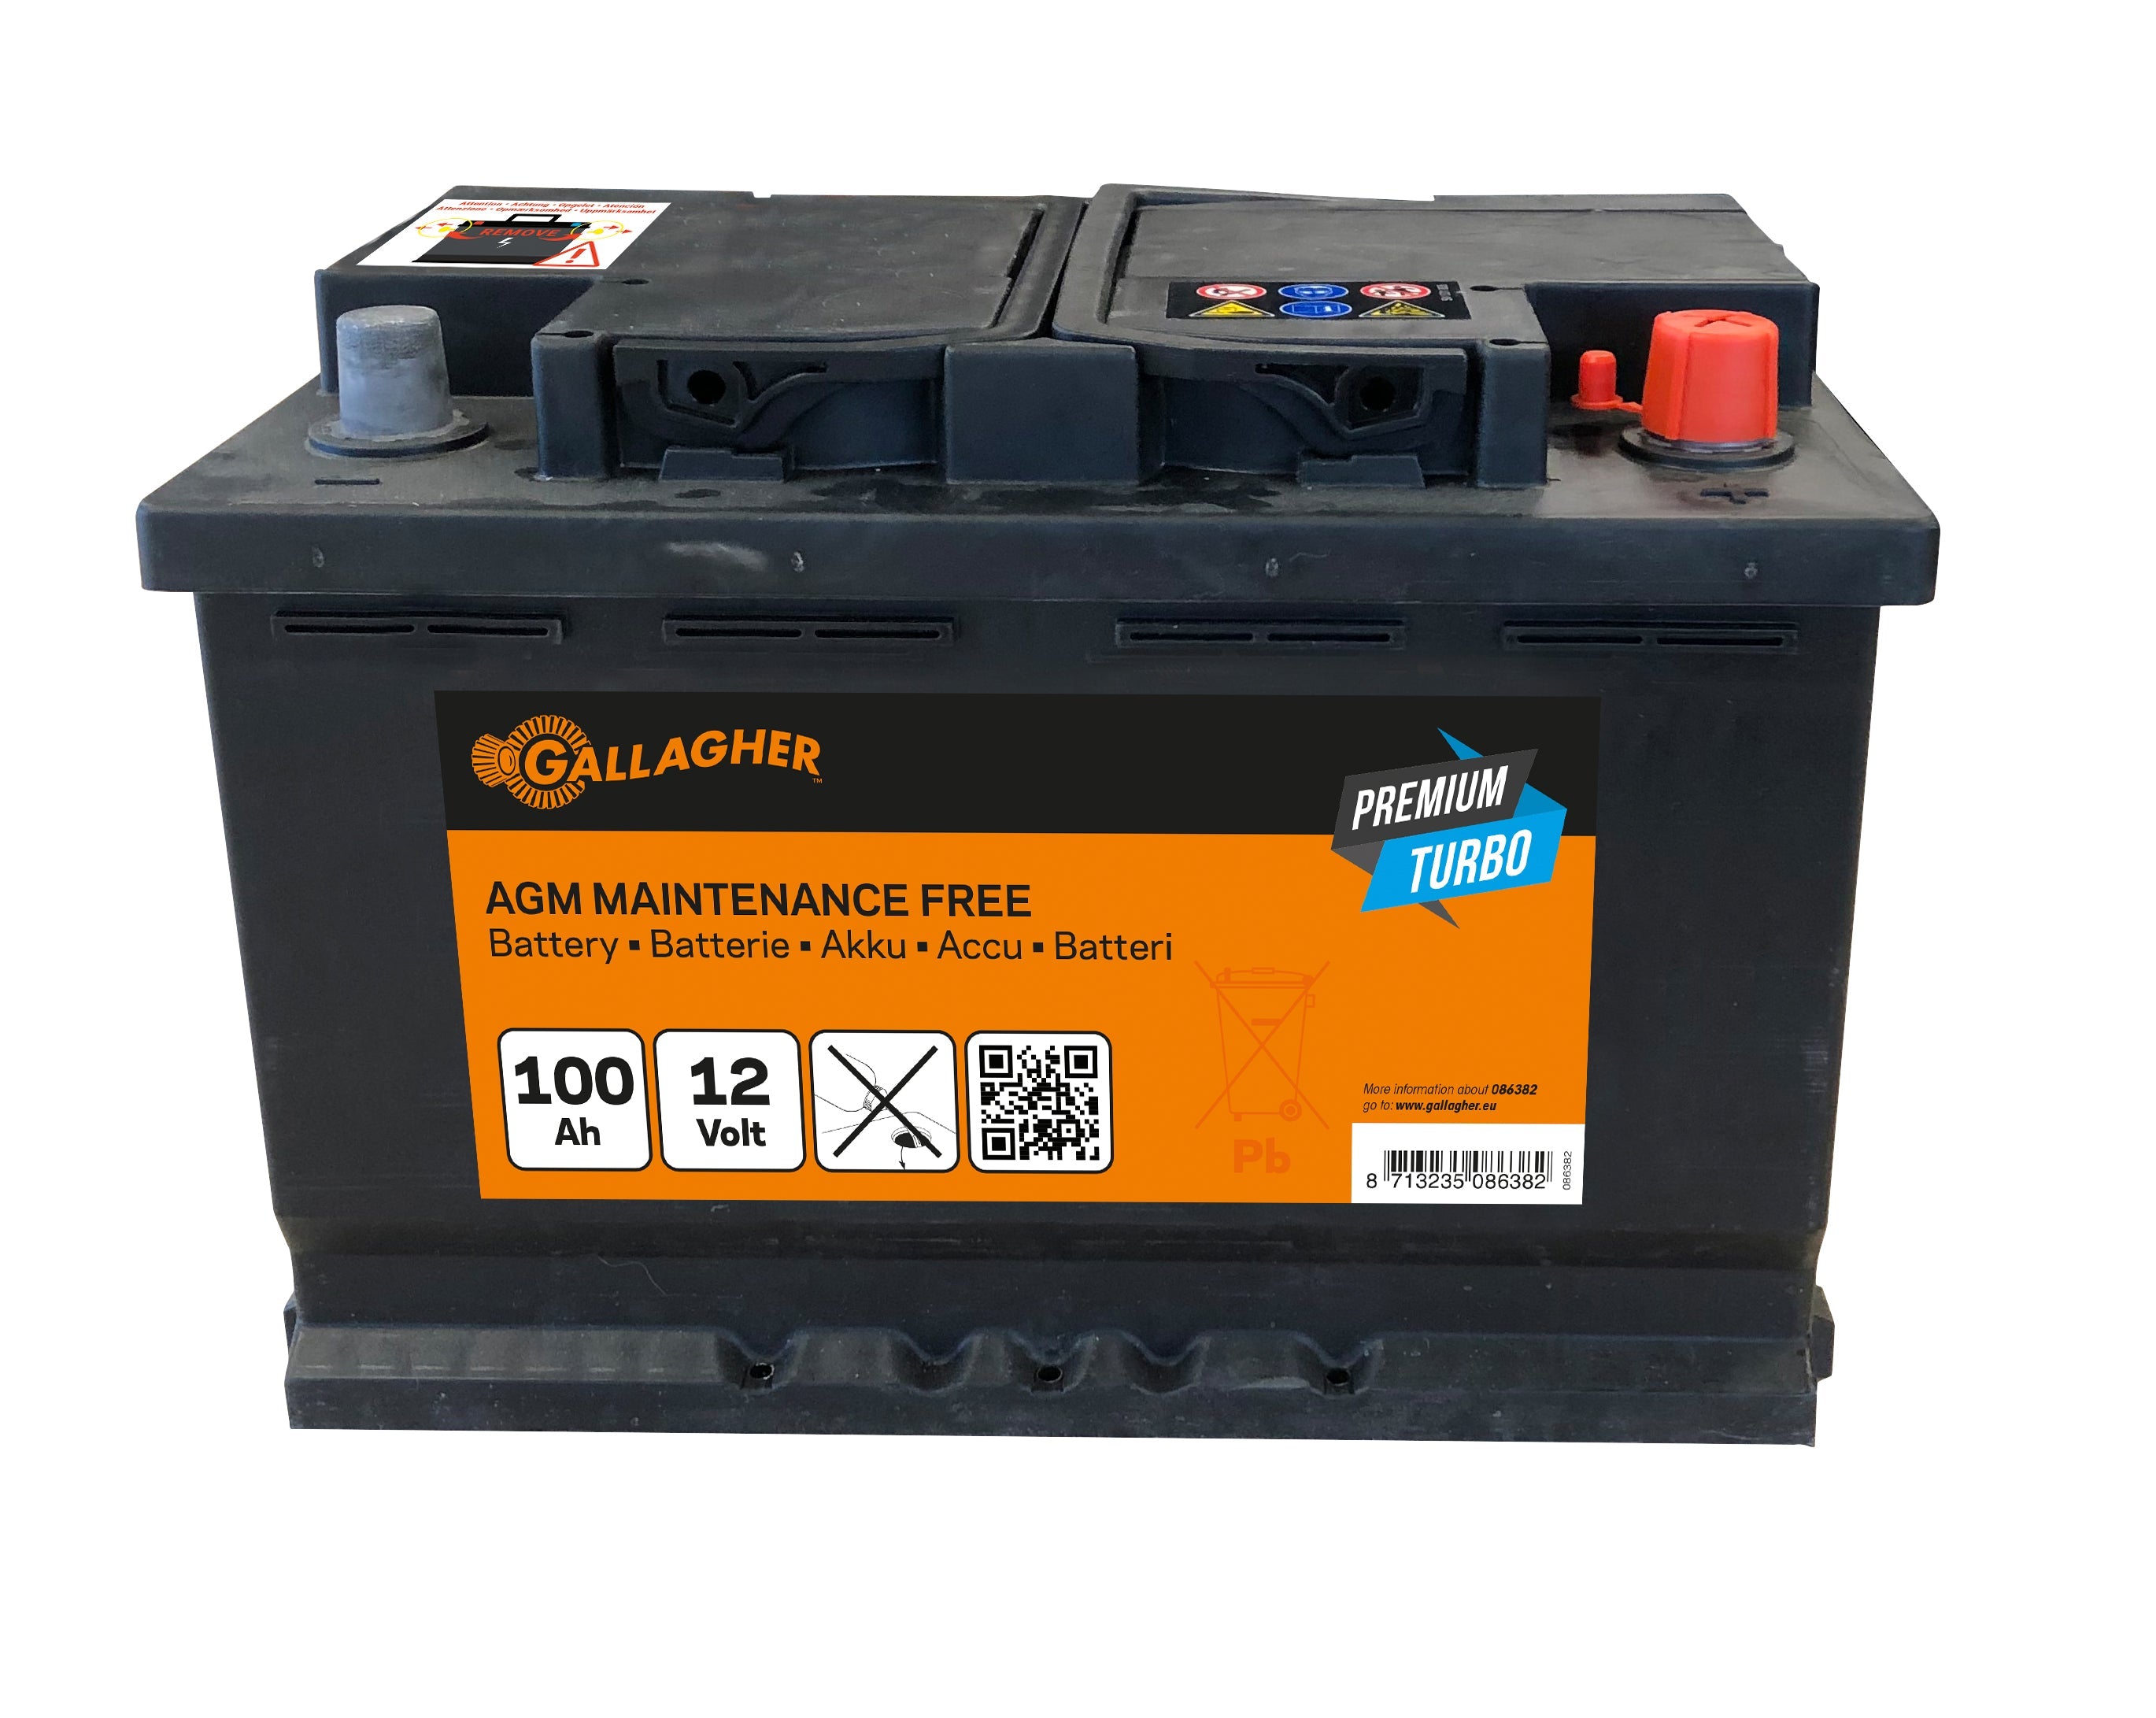 Battery 12V/100Ah Premium Turbo AGM - 353x175x190